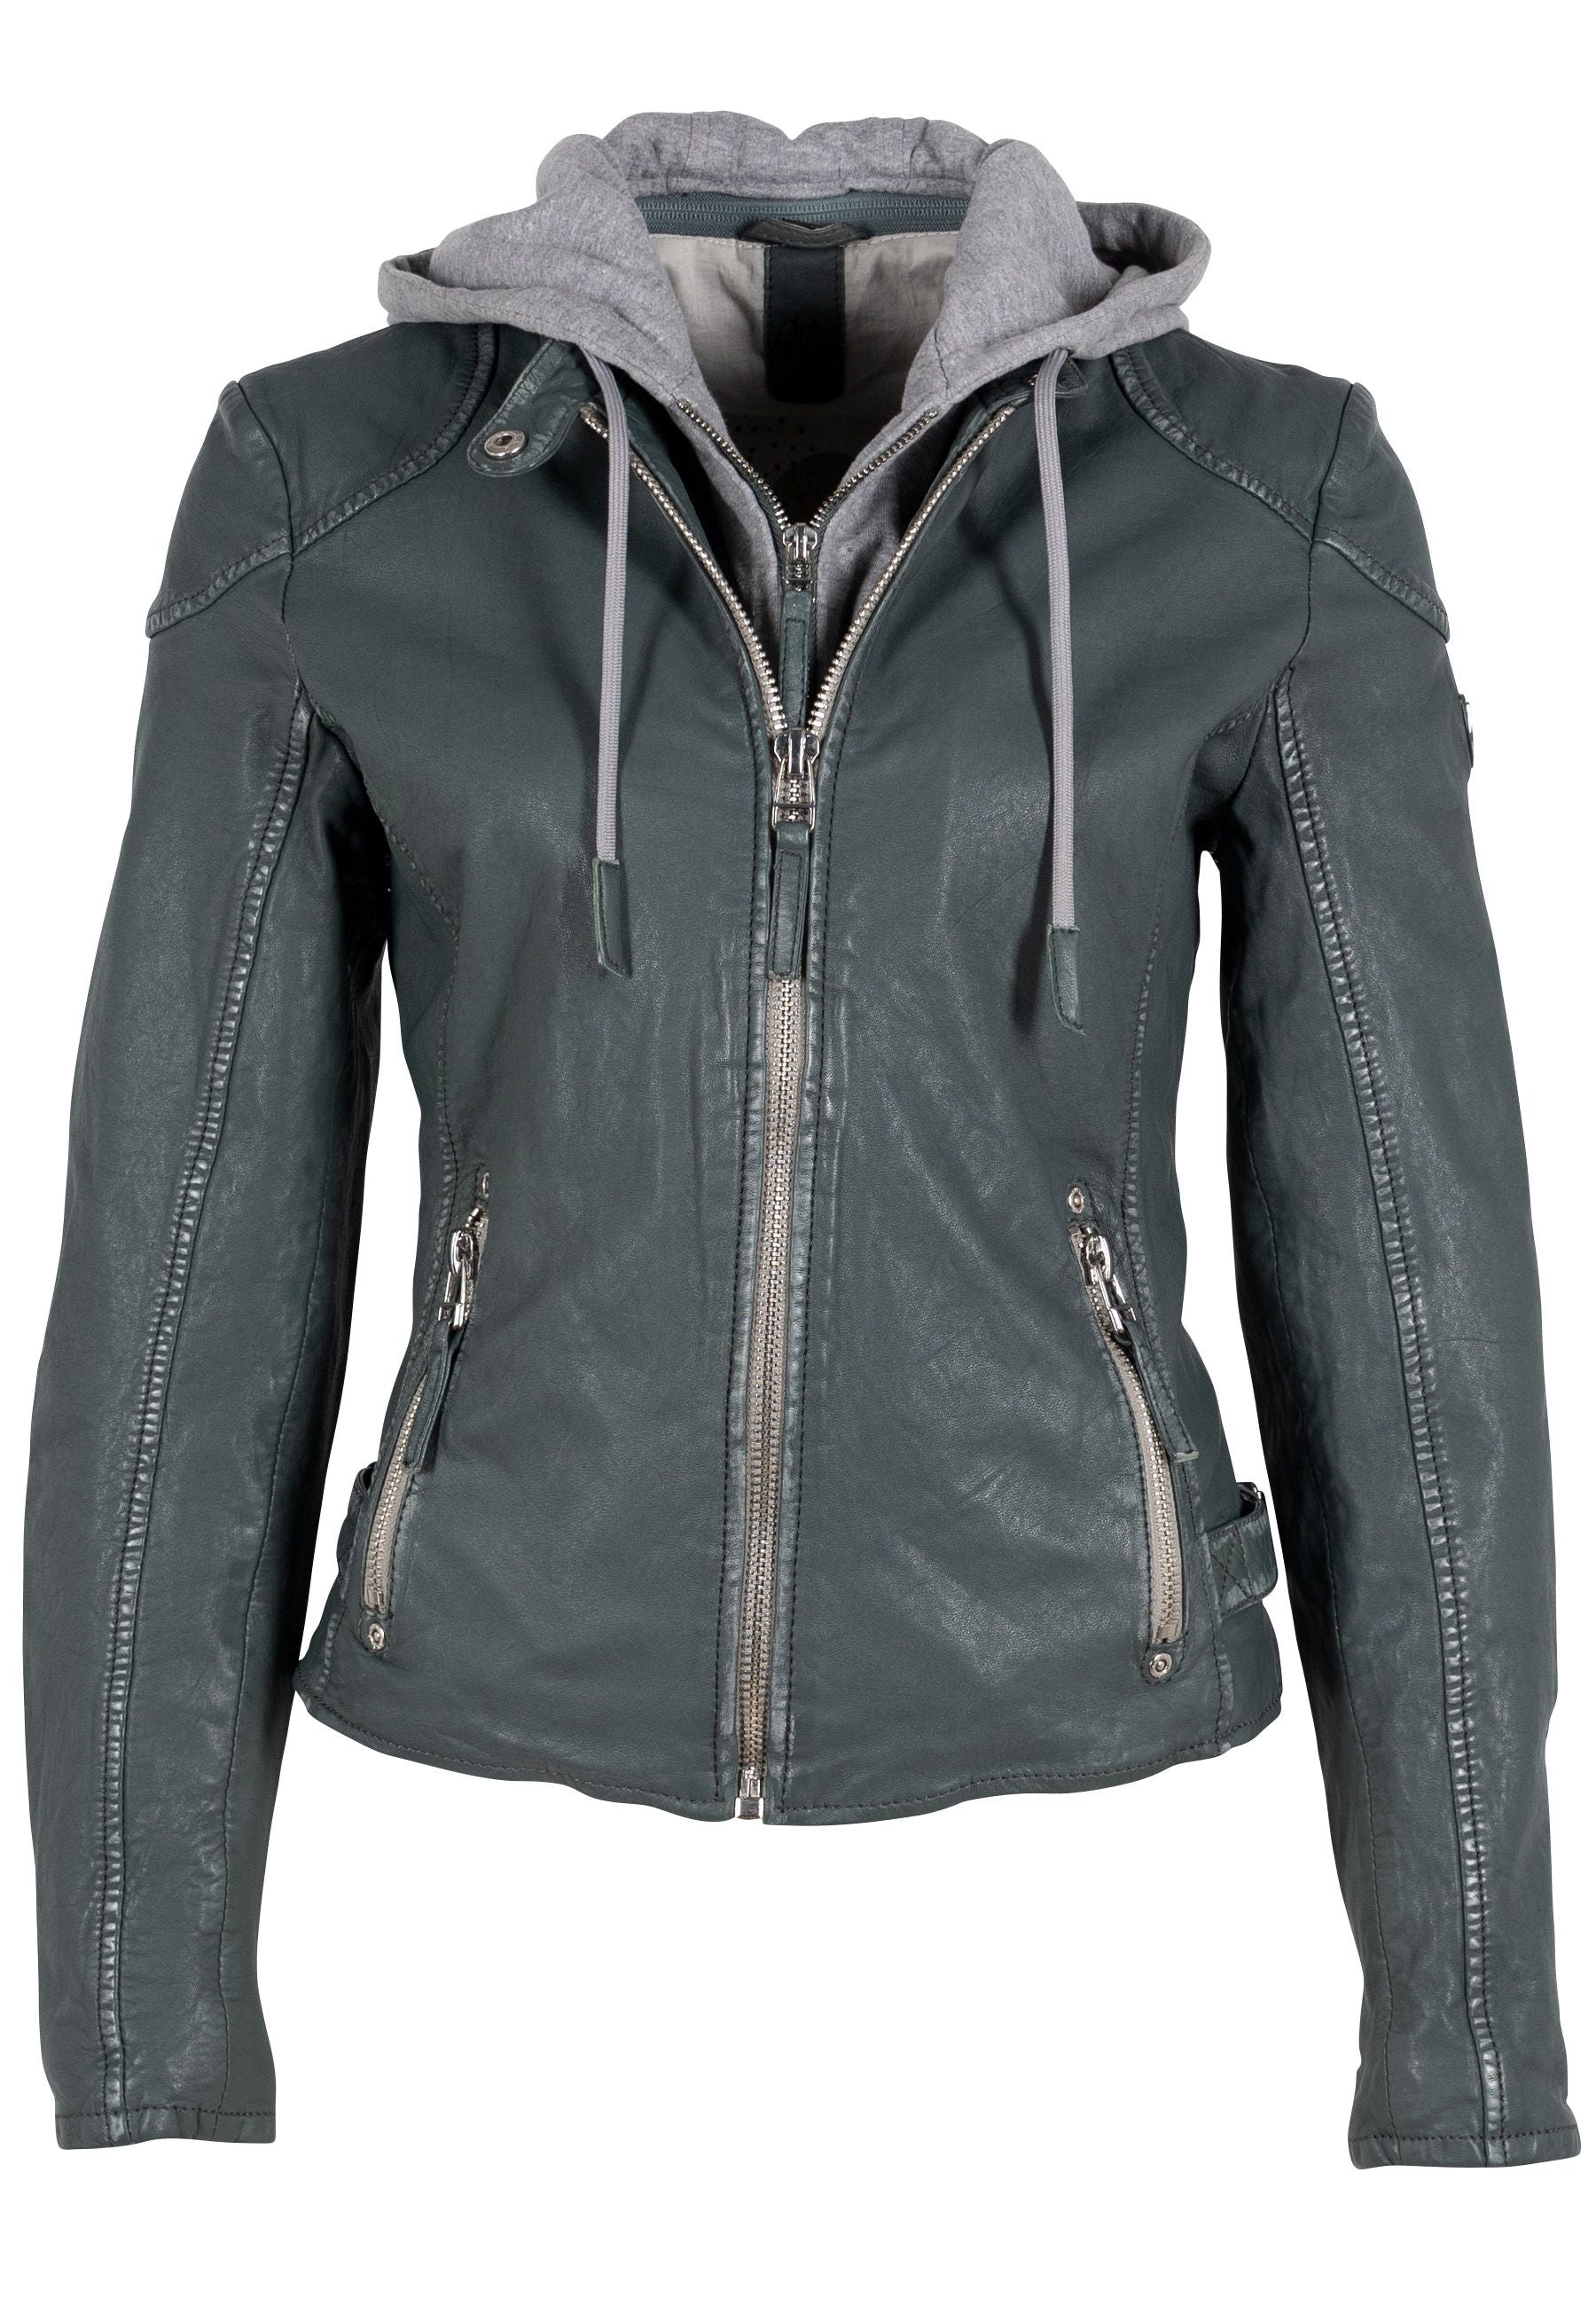 Elly Black Leather Jacket with Belt